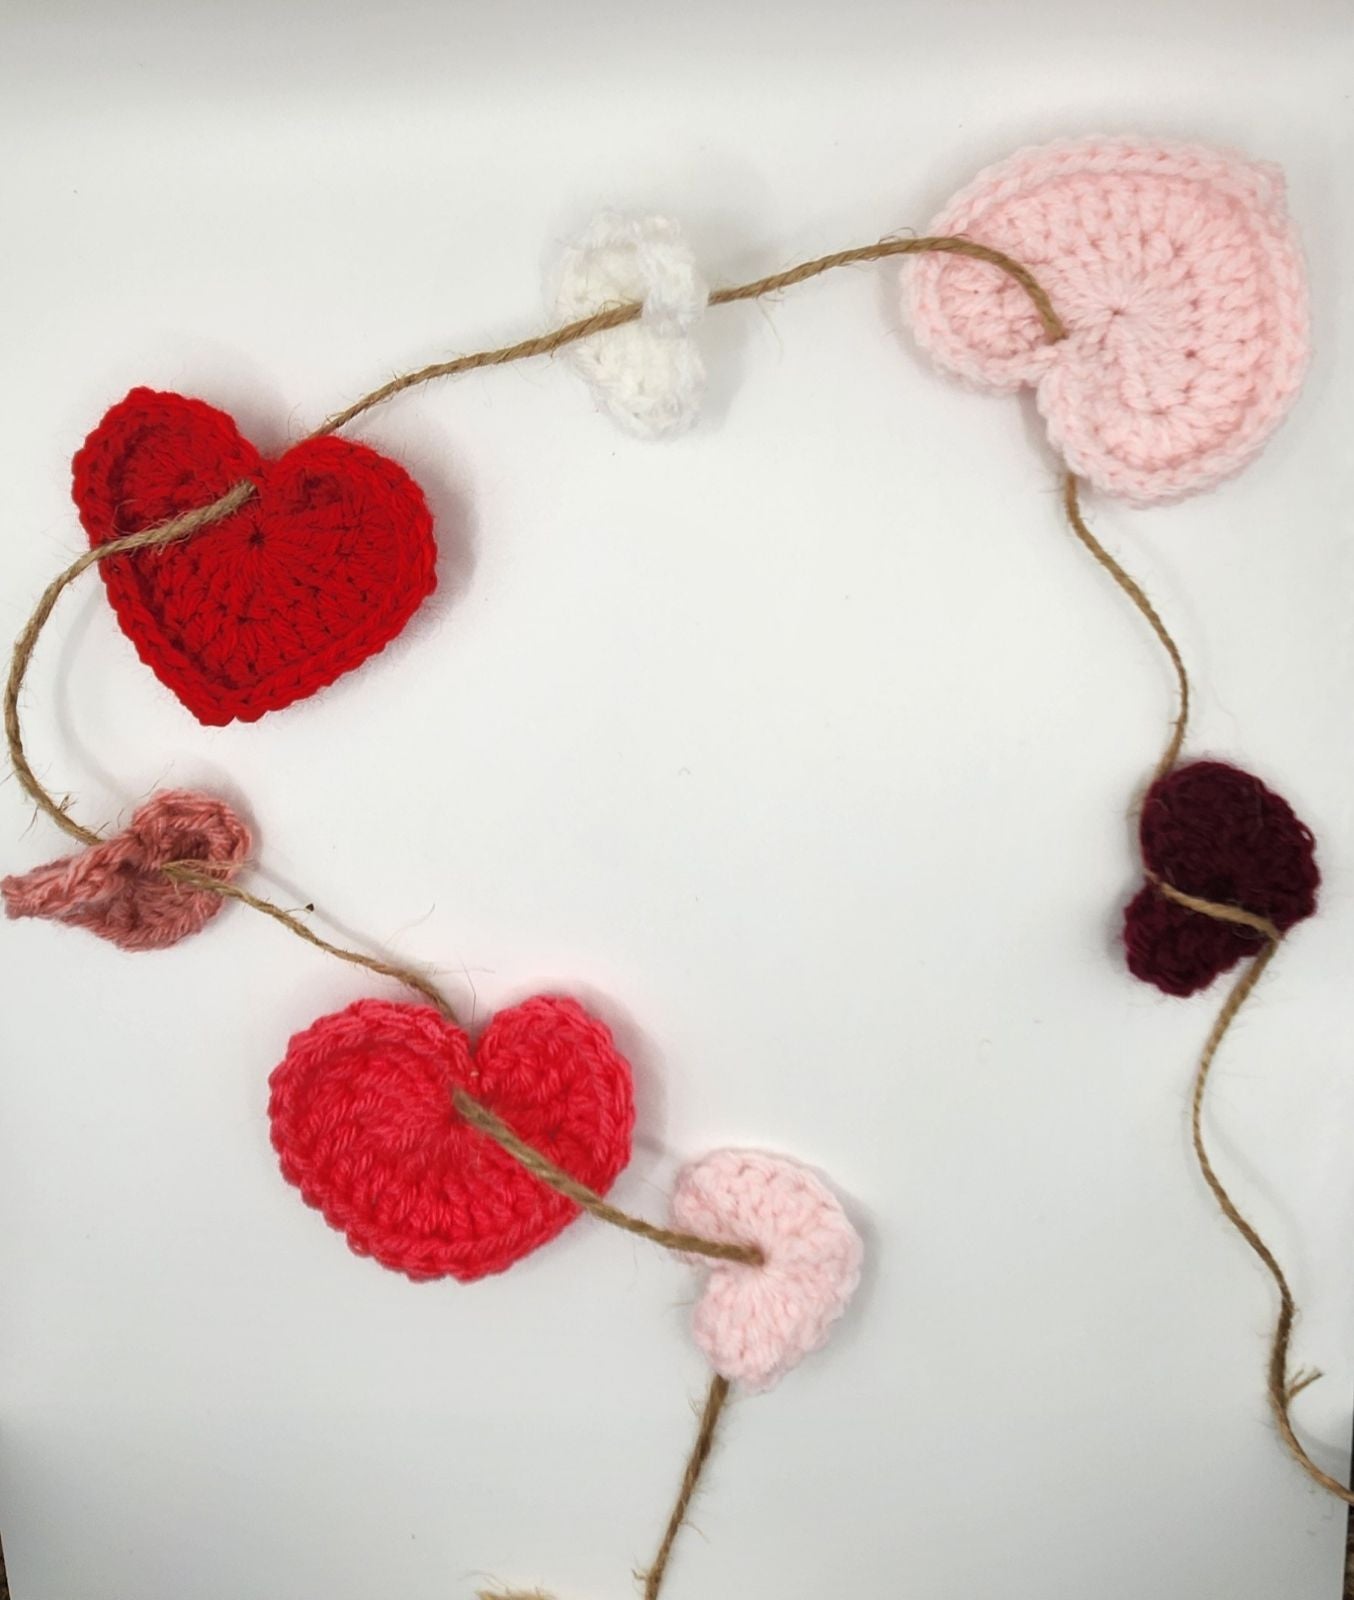 Crochet Heart Garland Workshop with Nicholls Knits